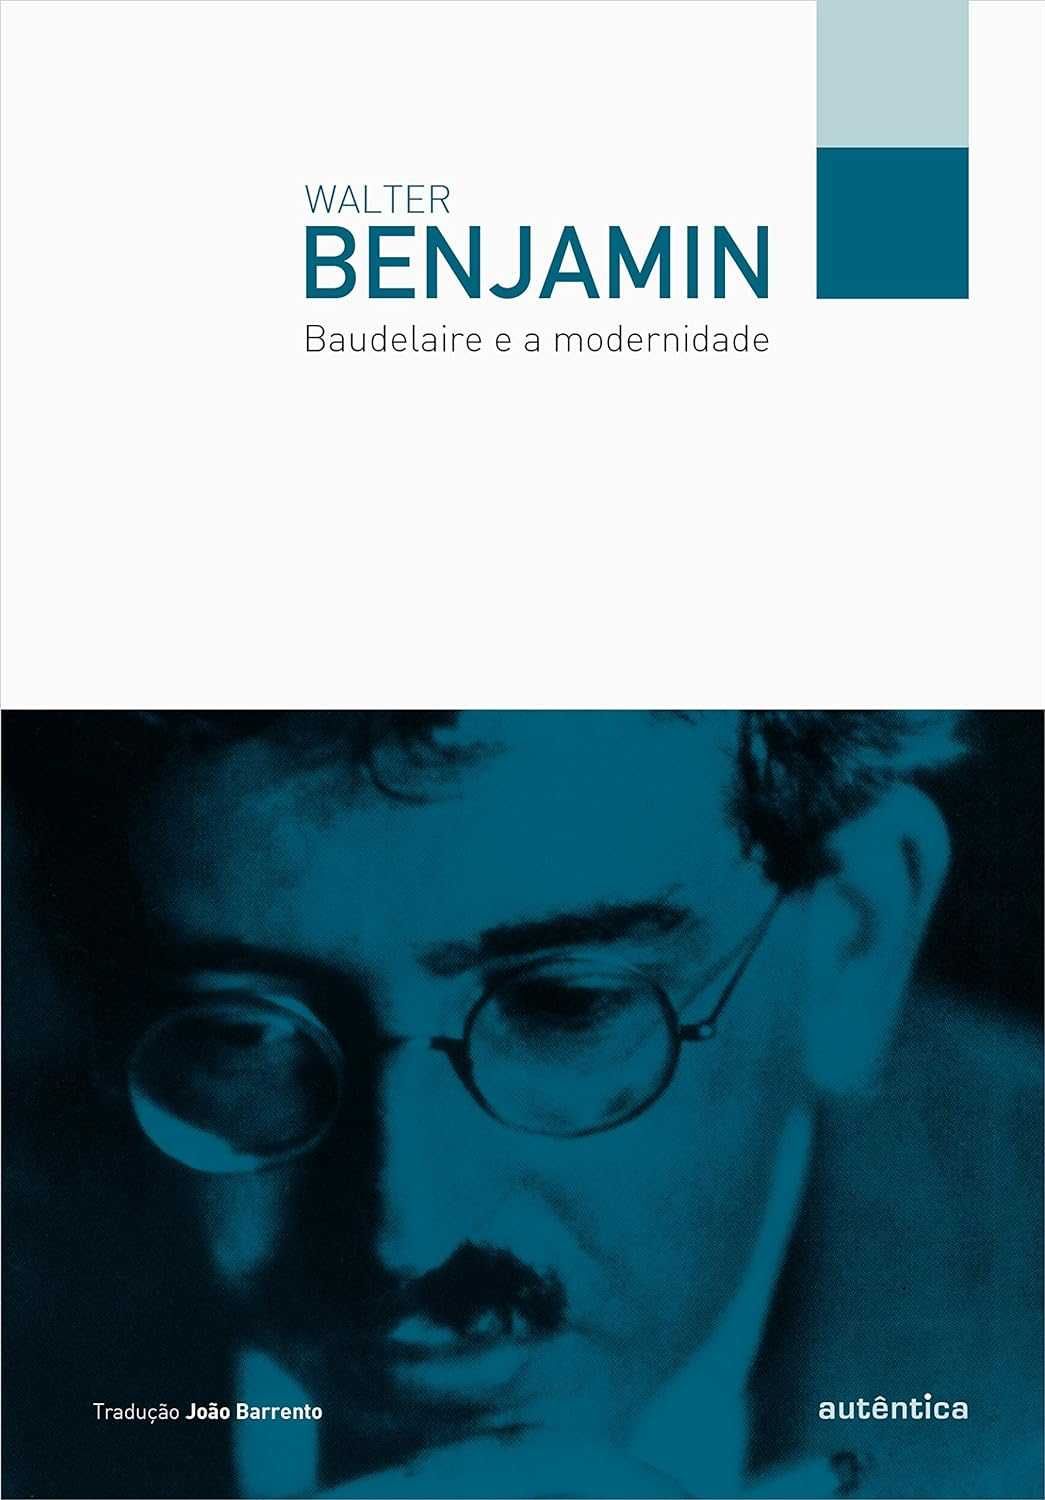 Walter Benjamin - Pack de livros raros